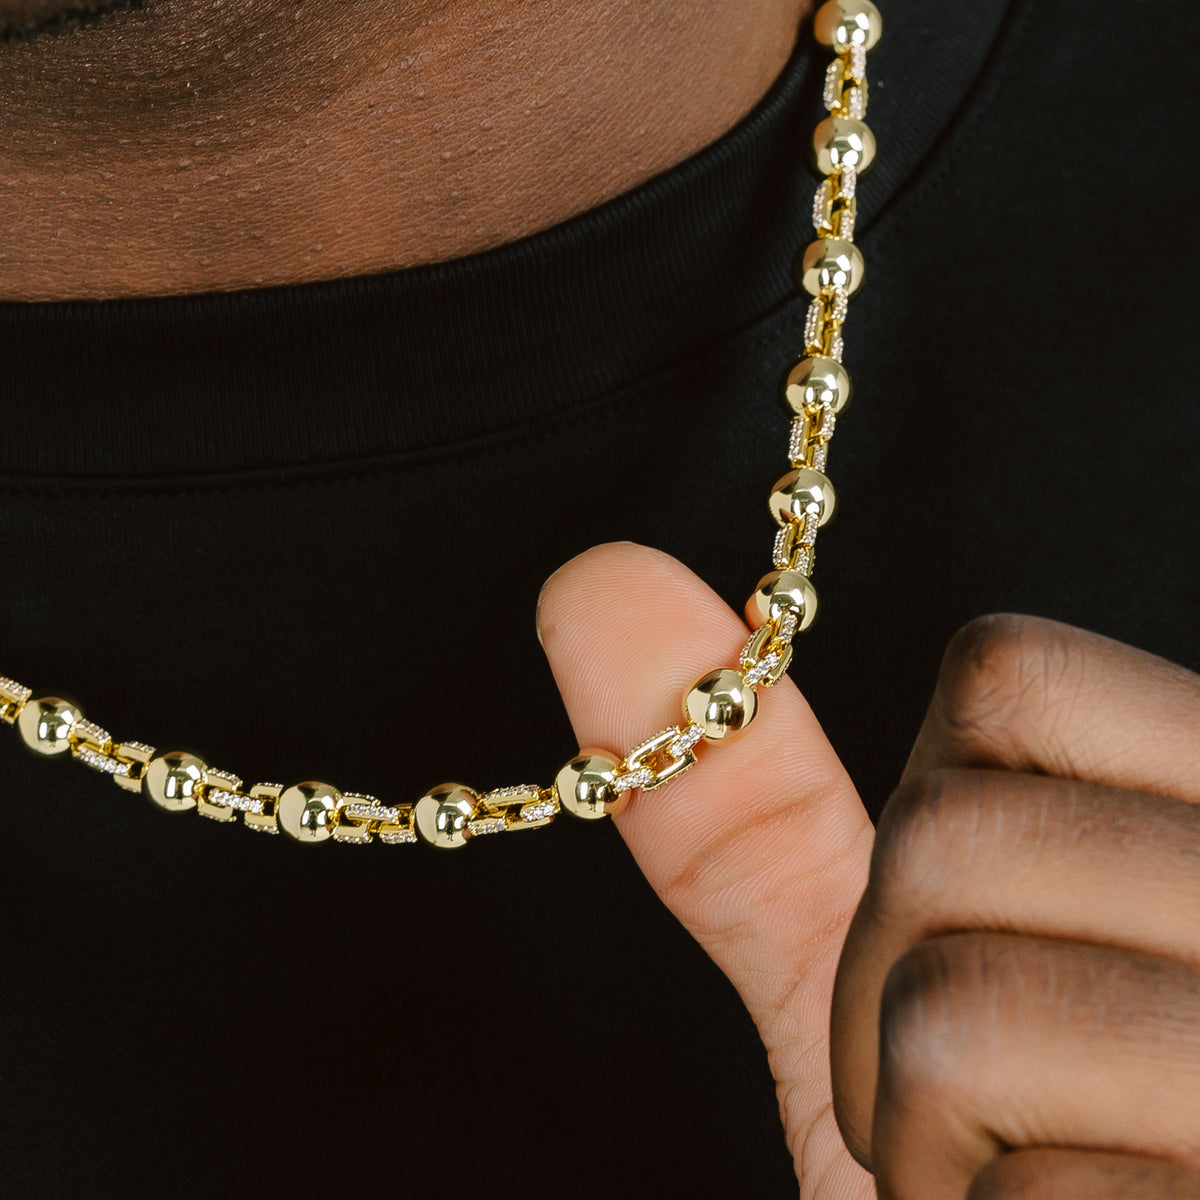 Cuffed Beads Chain 18k Gold